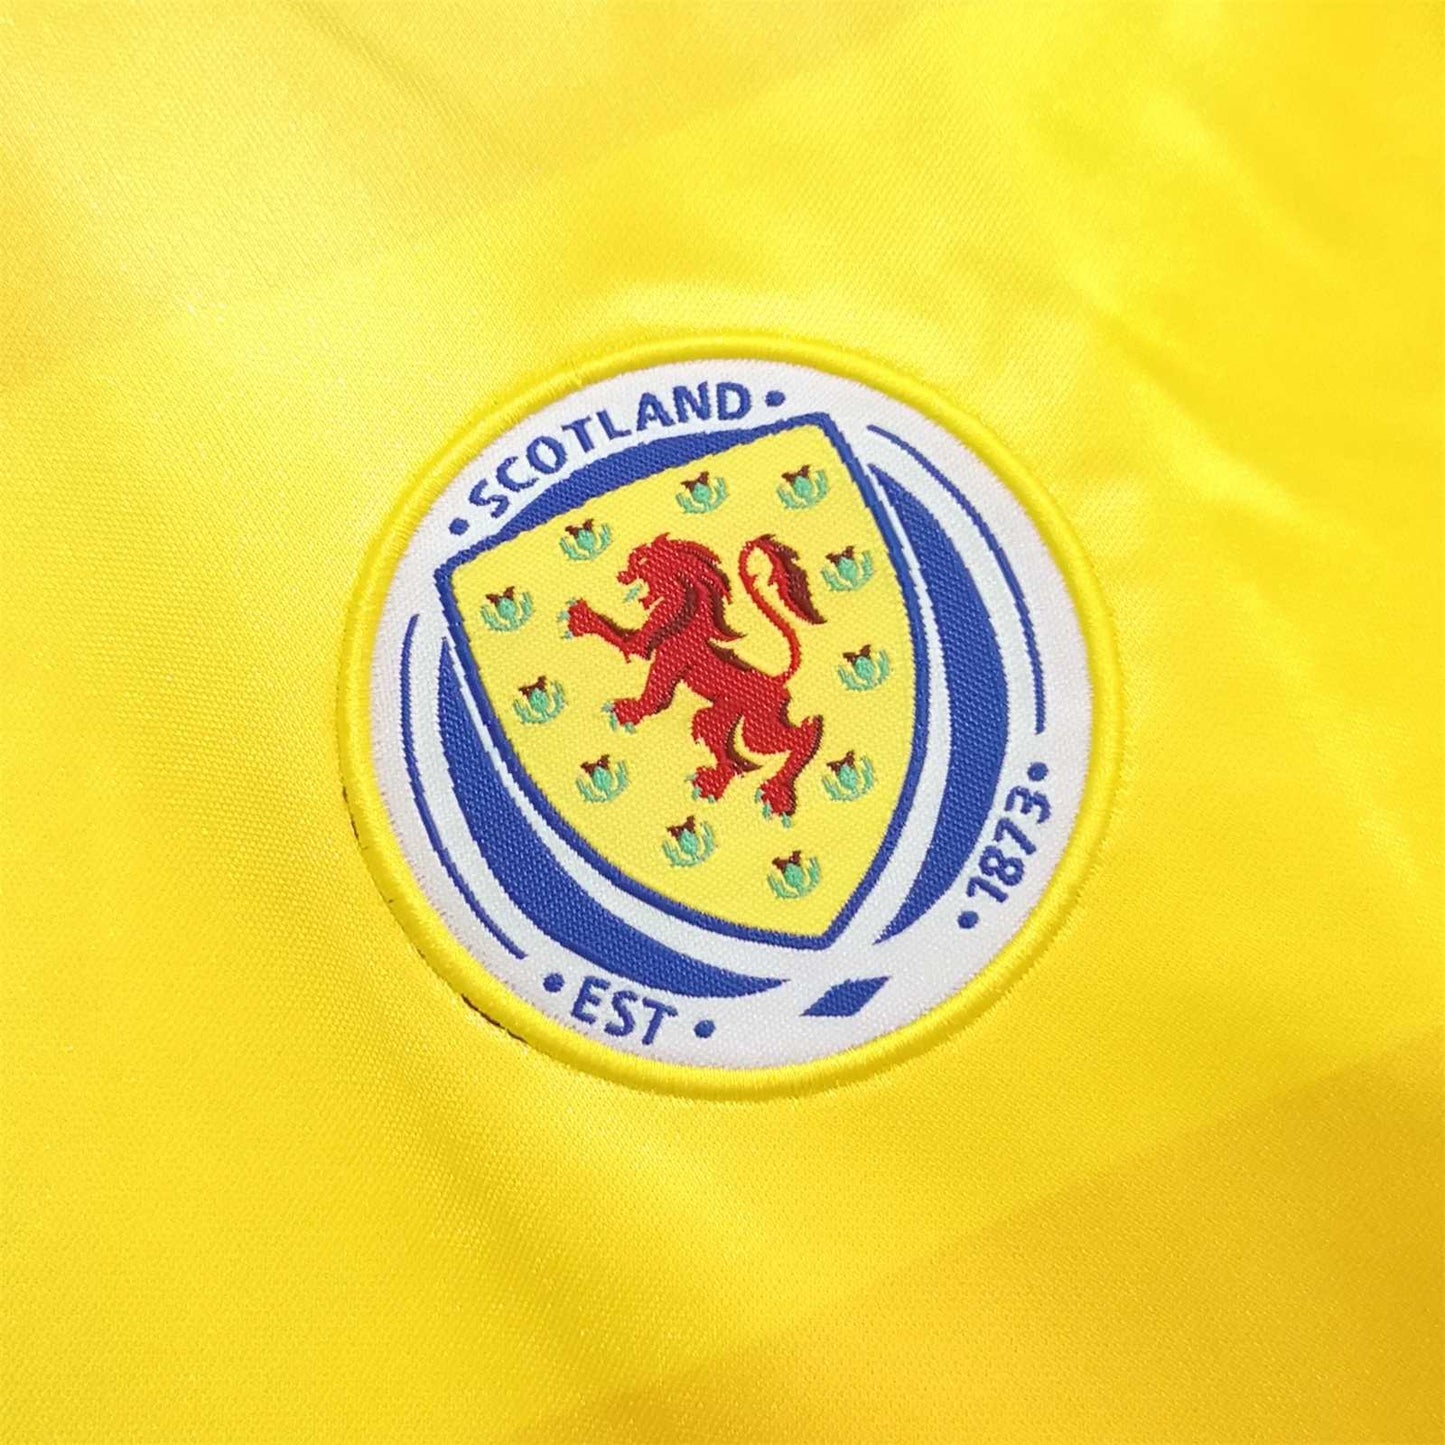 Scotland 1986 Away Shirt